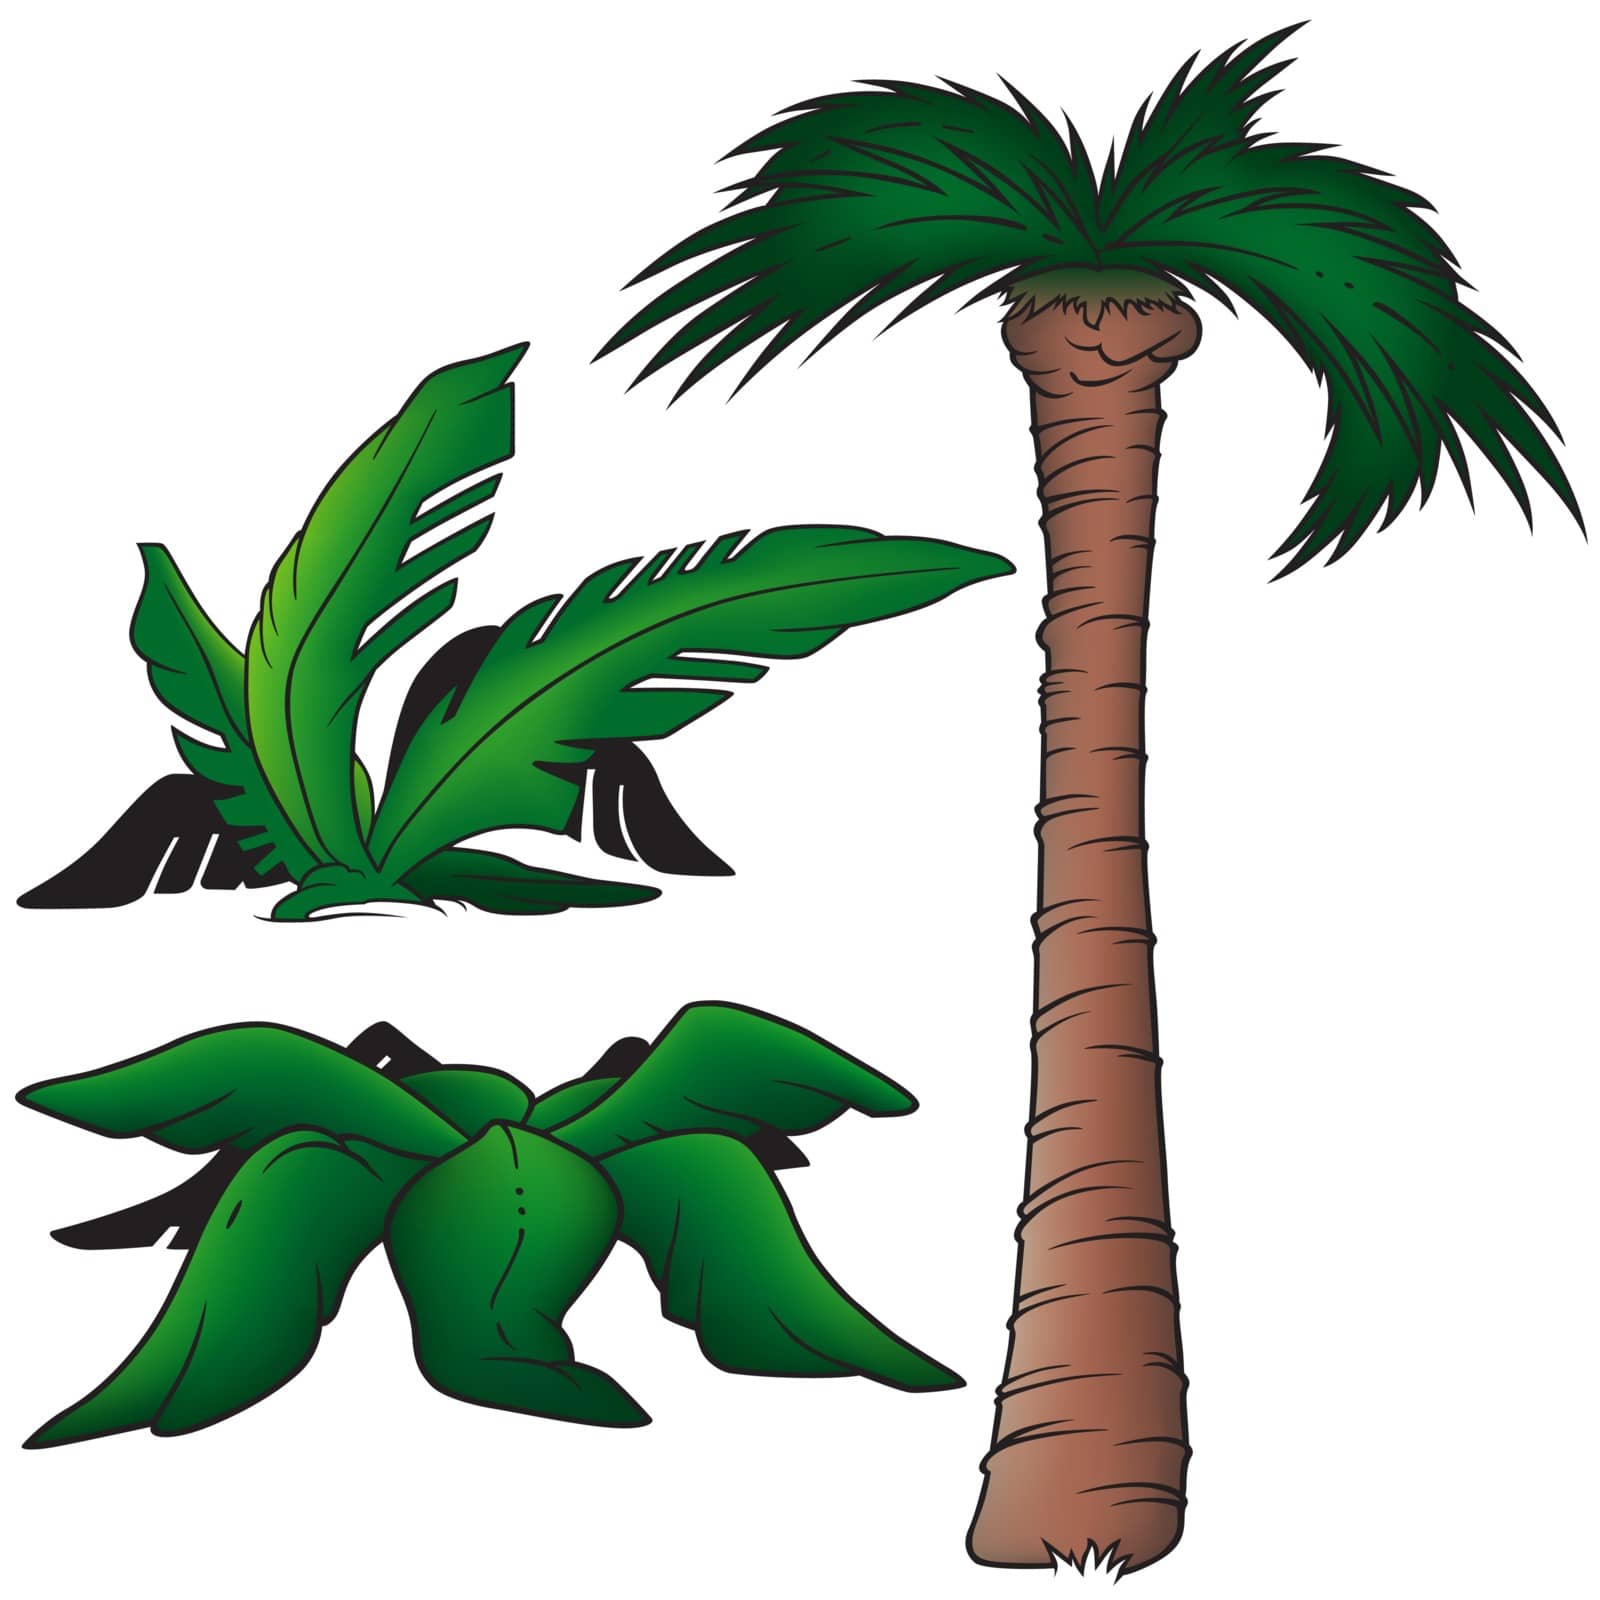 Palms by illustratorCZ